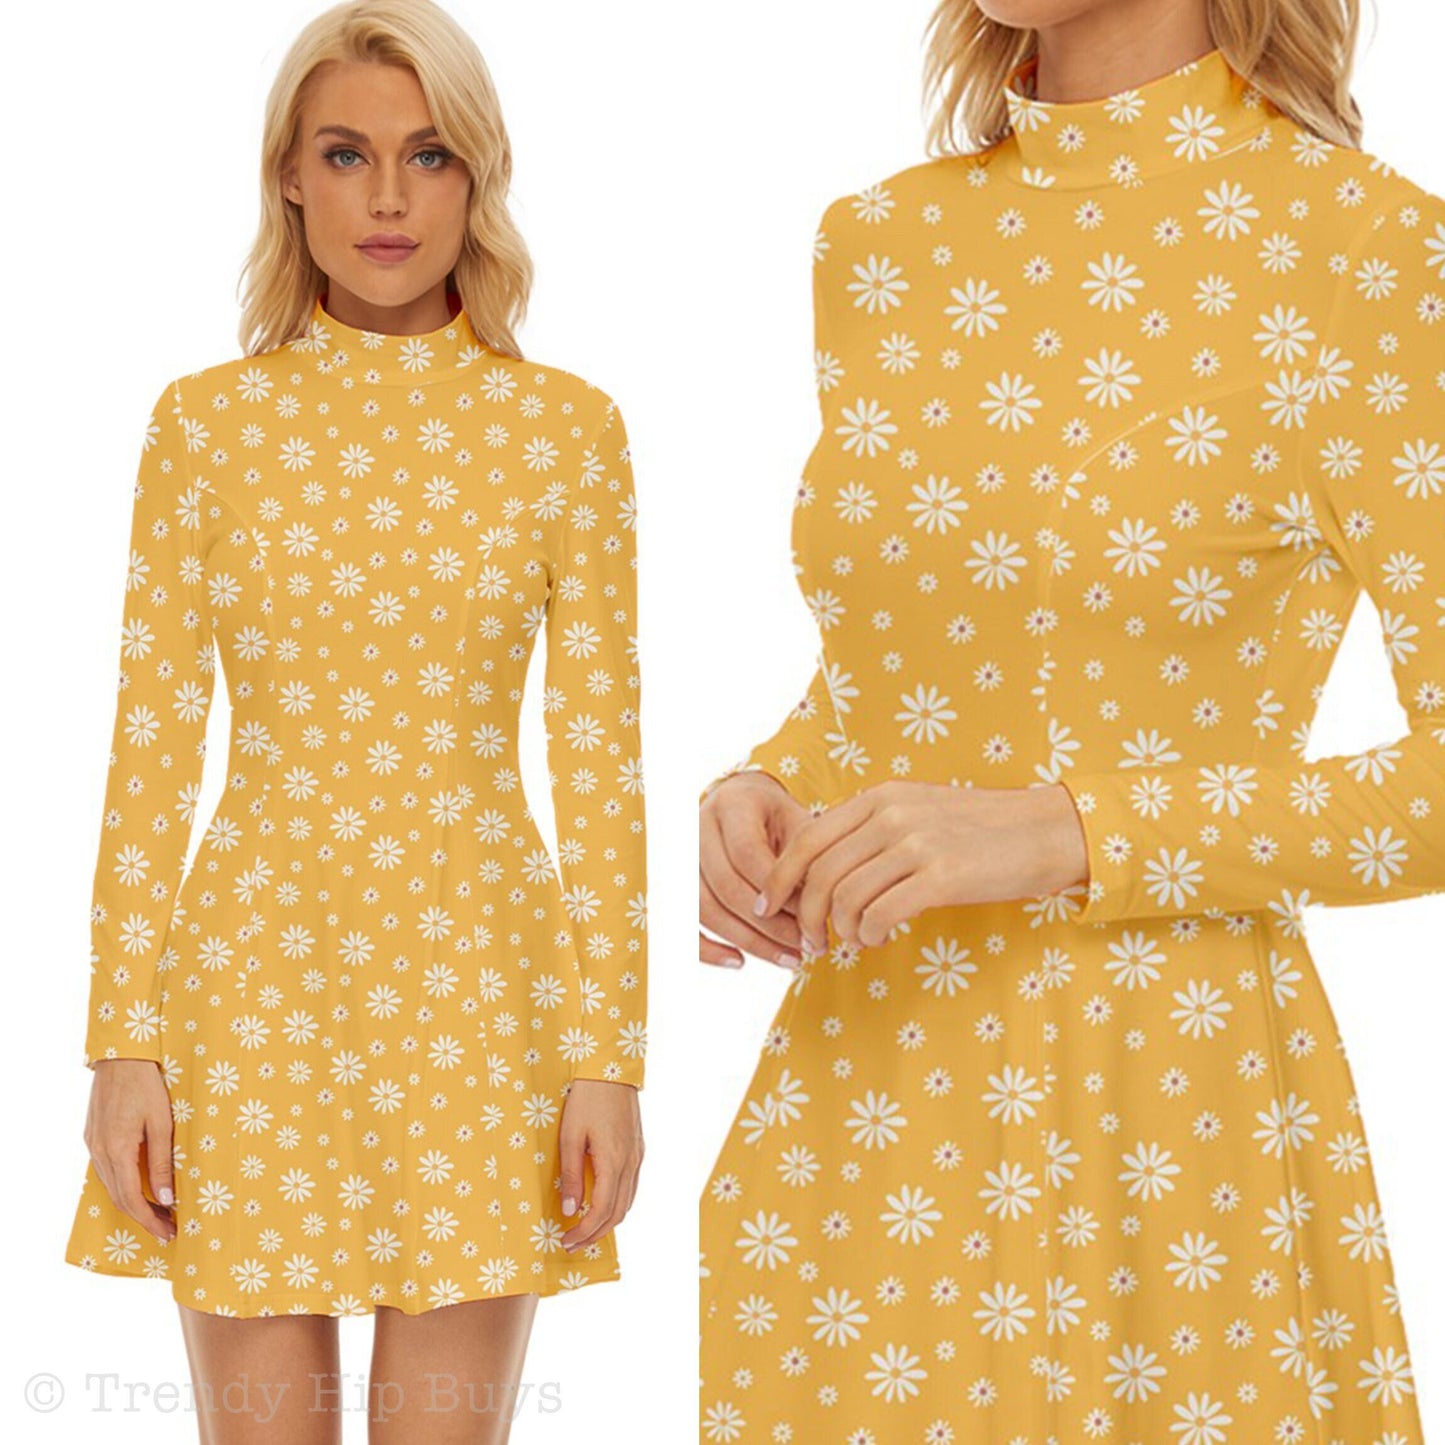 Style vestimentaire des années 60, robe Mod, robe Mod jaune, robe col tortue, robe GOGO, robe de style années 60, mini robe des années 60, robe florale, robe rétro